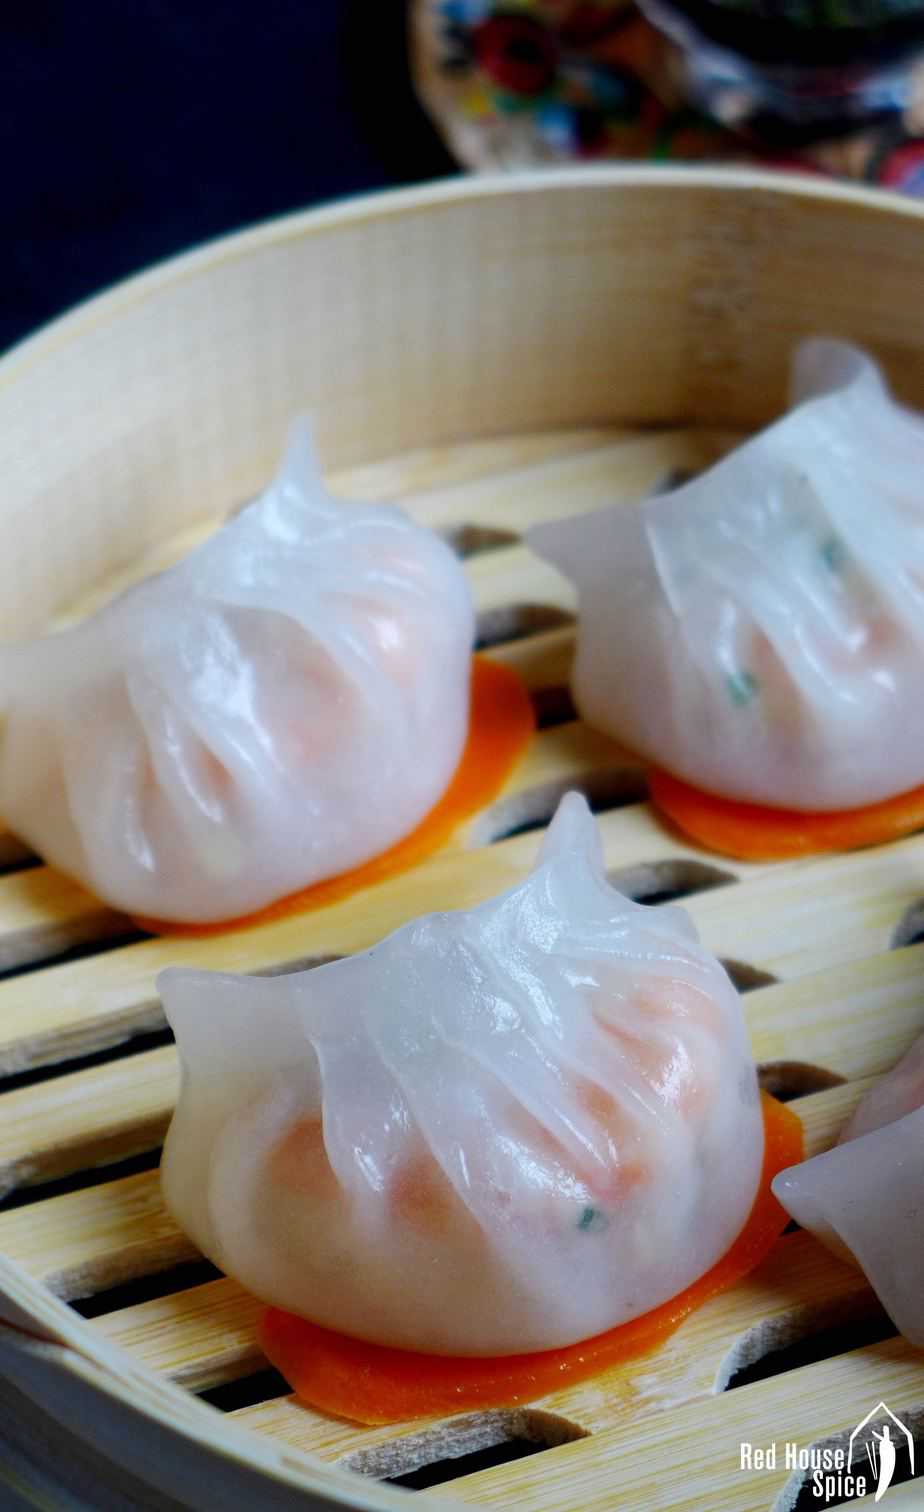 Har Gow, crystal shrimp dumplings in steamer baskets